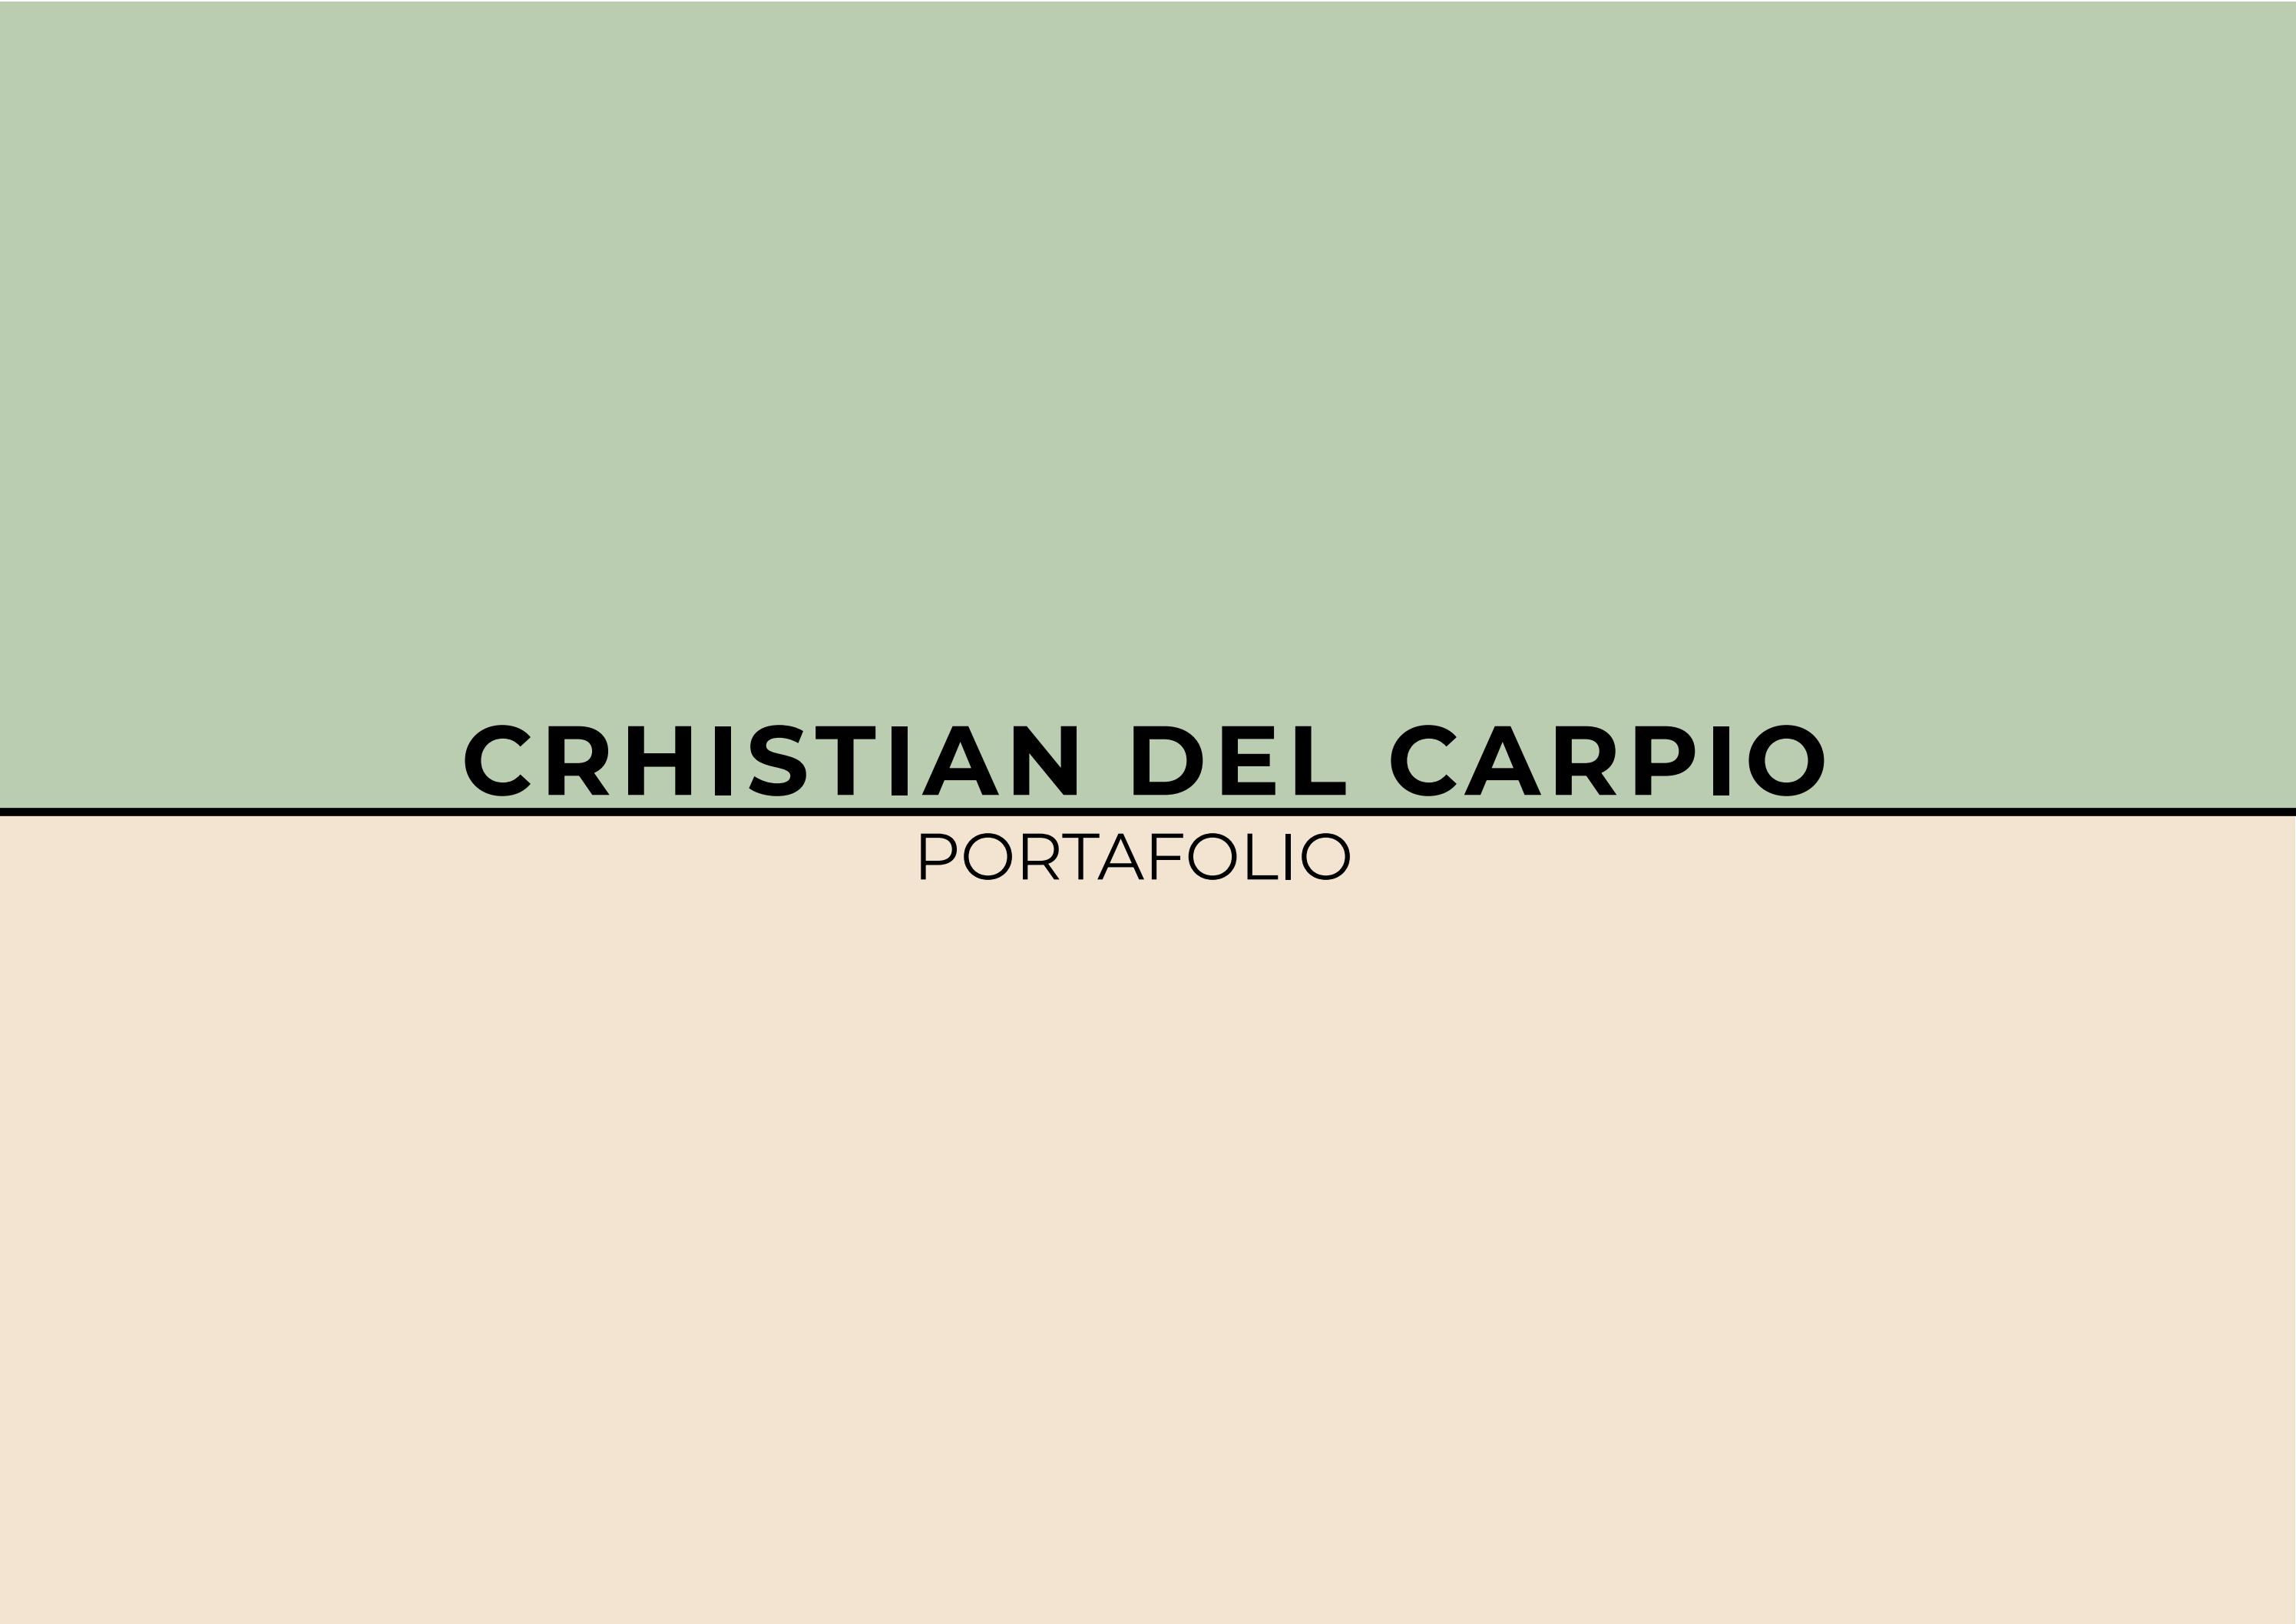 CRHISTIAN DEL CARPIO
PORTAFOLIO